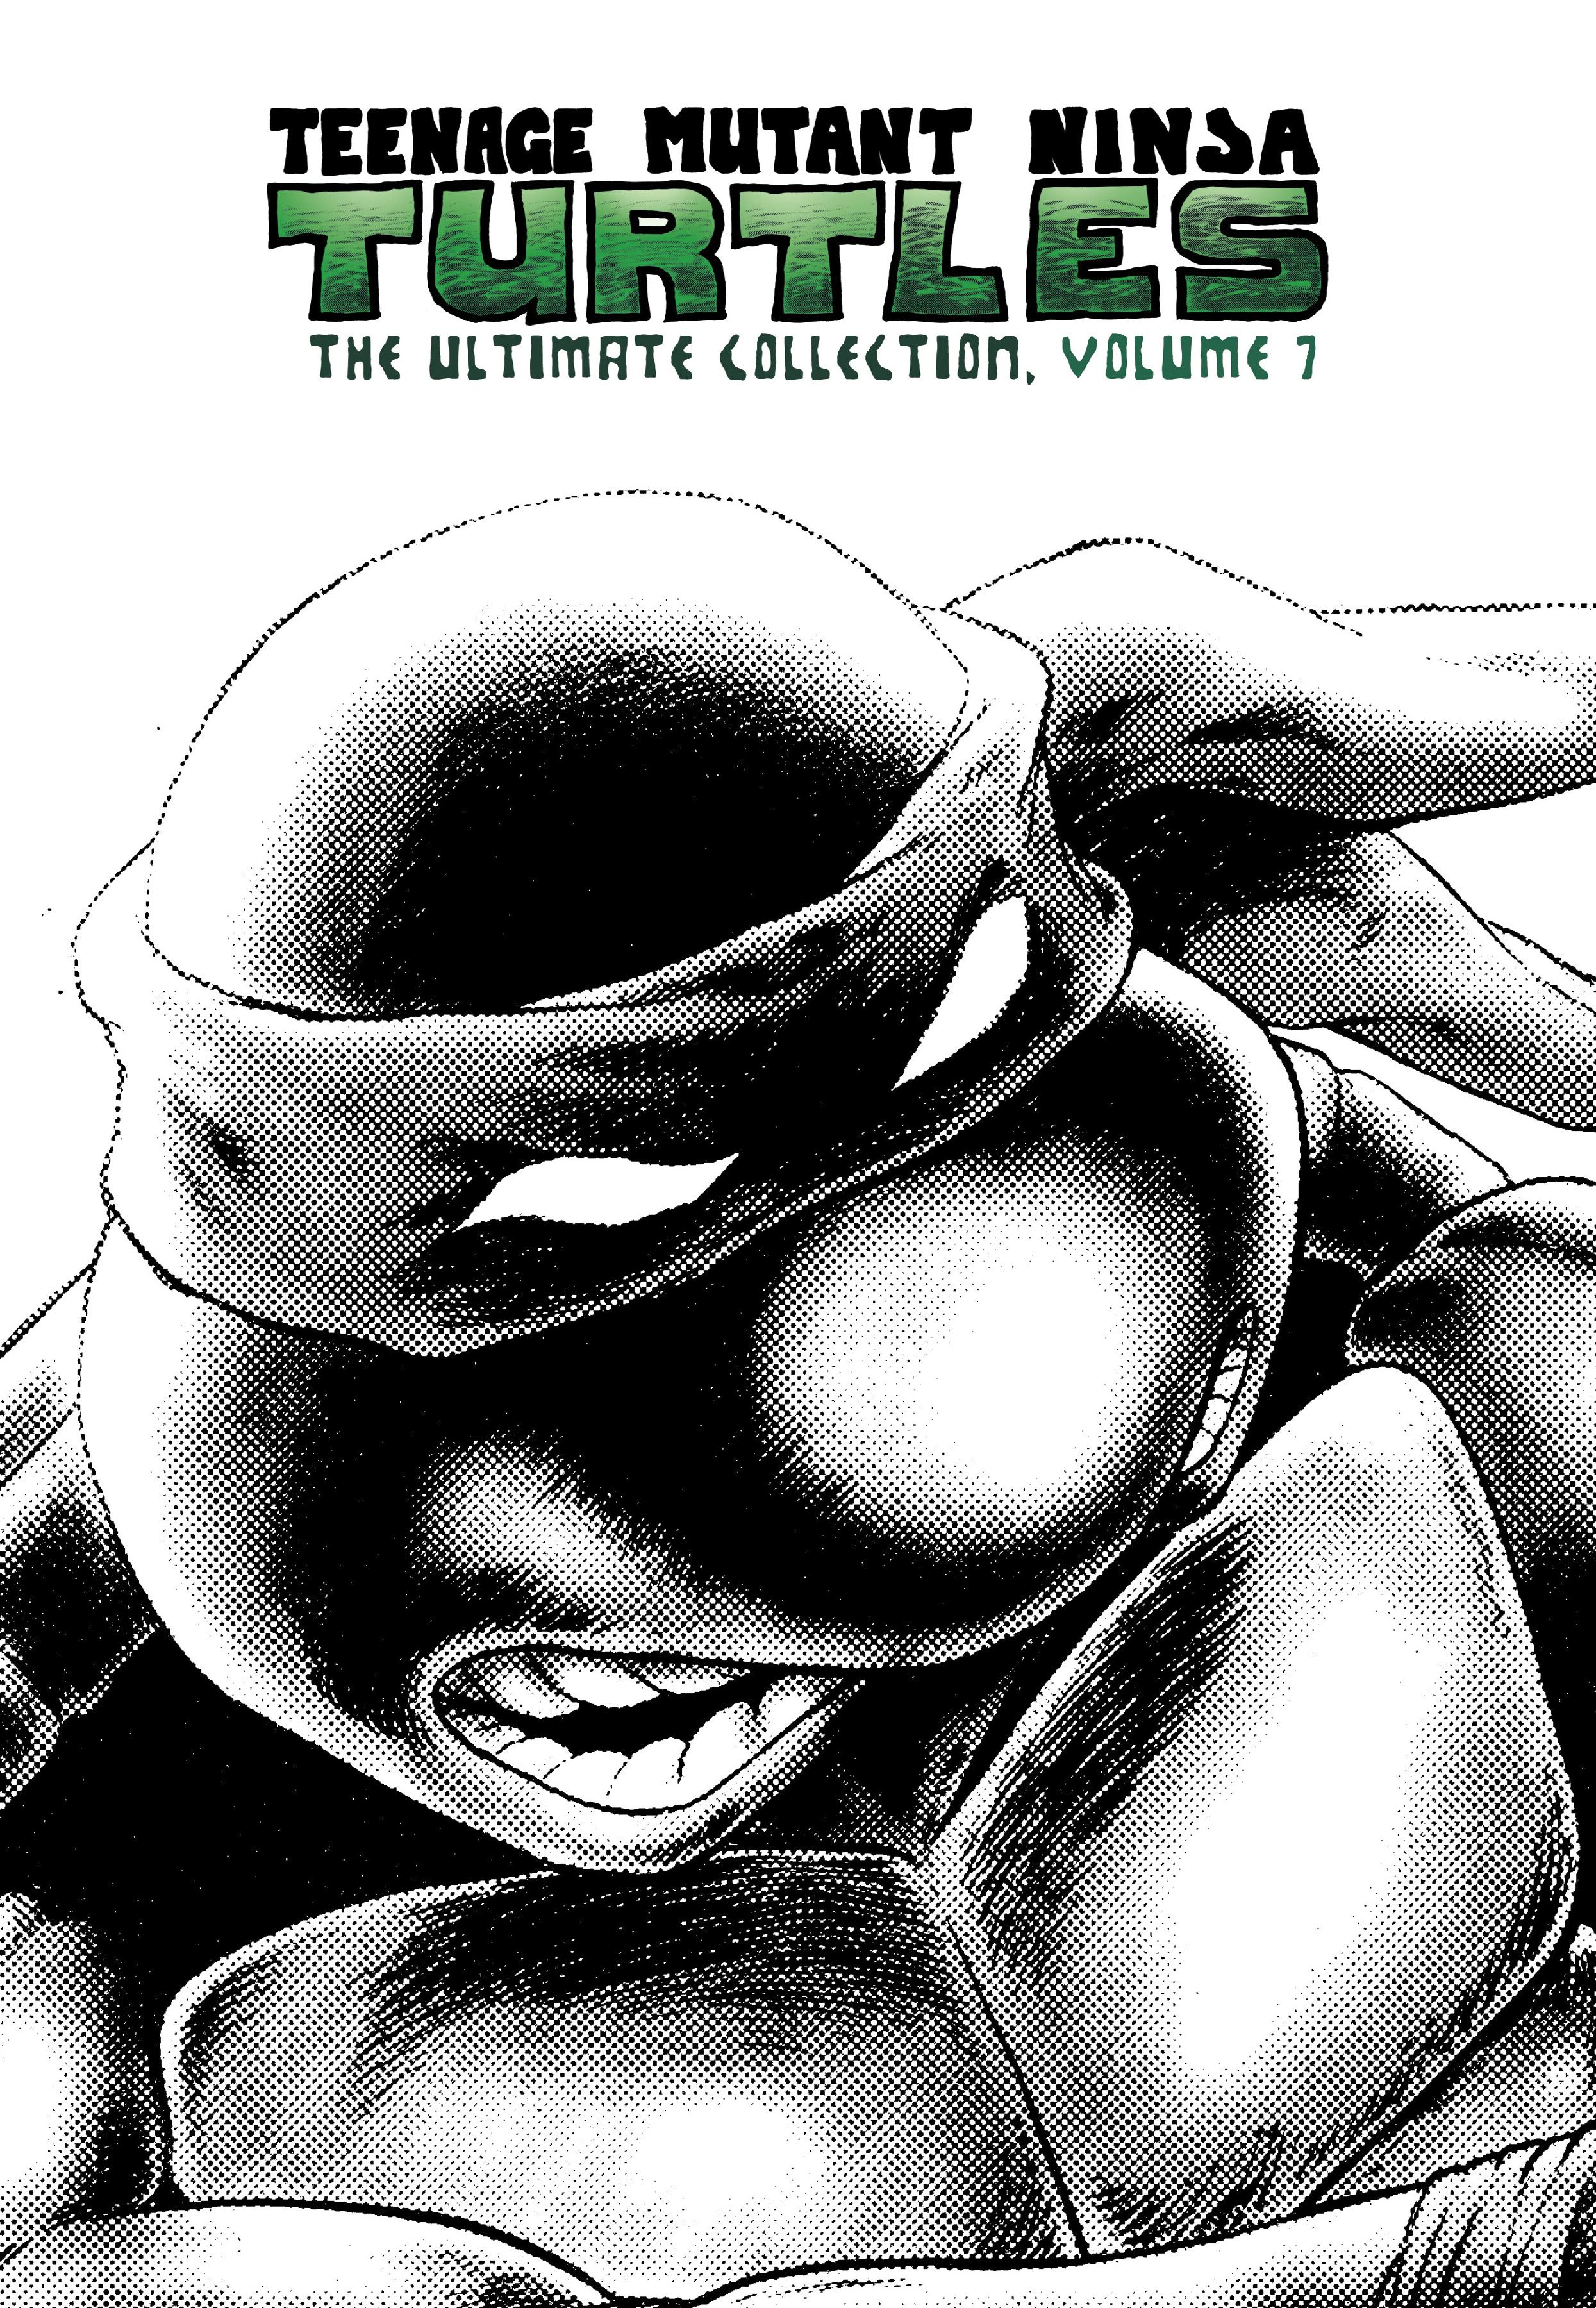 Read online Teenage Mutant Ninja Turtles: The Ultimate Collection comic -  Issue # TPB 7 - 4